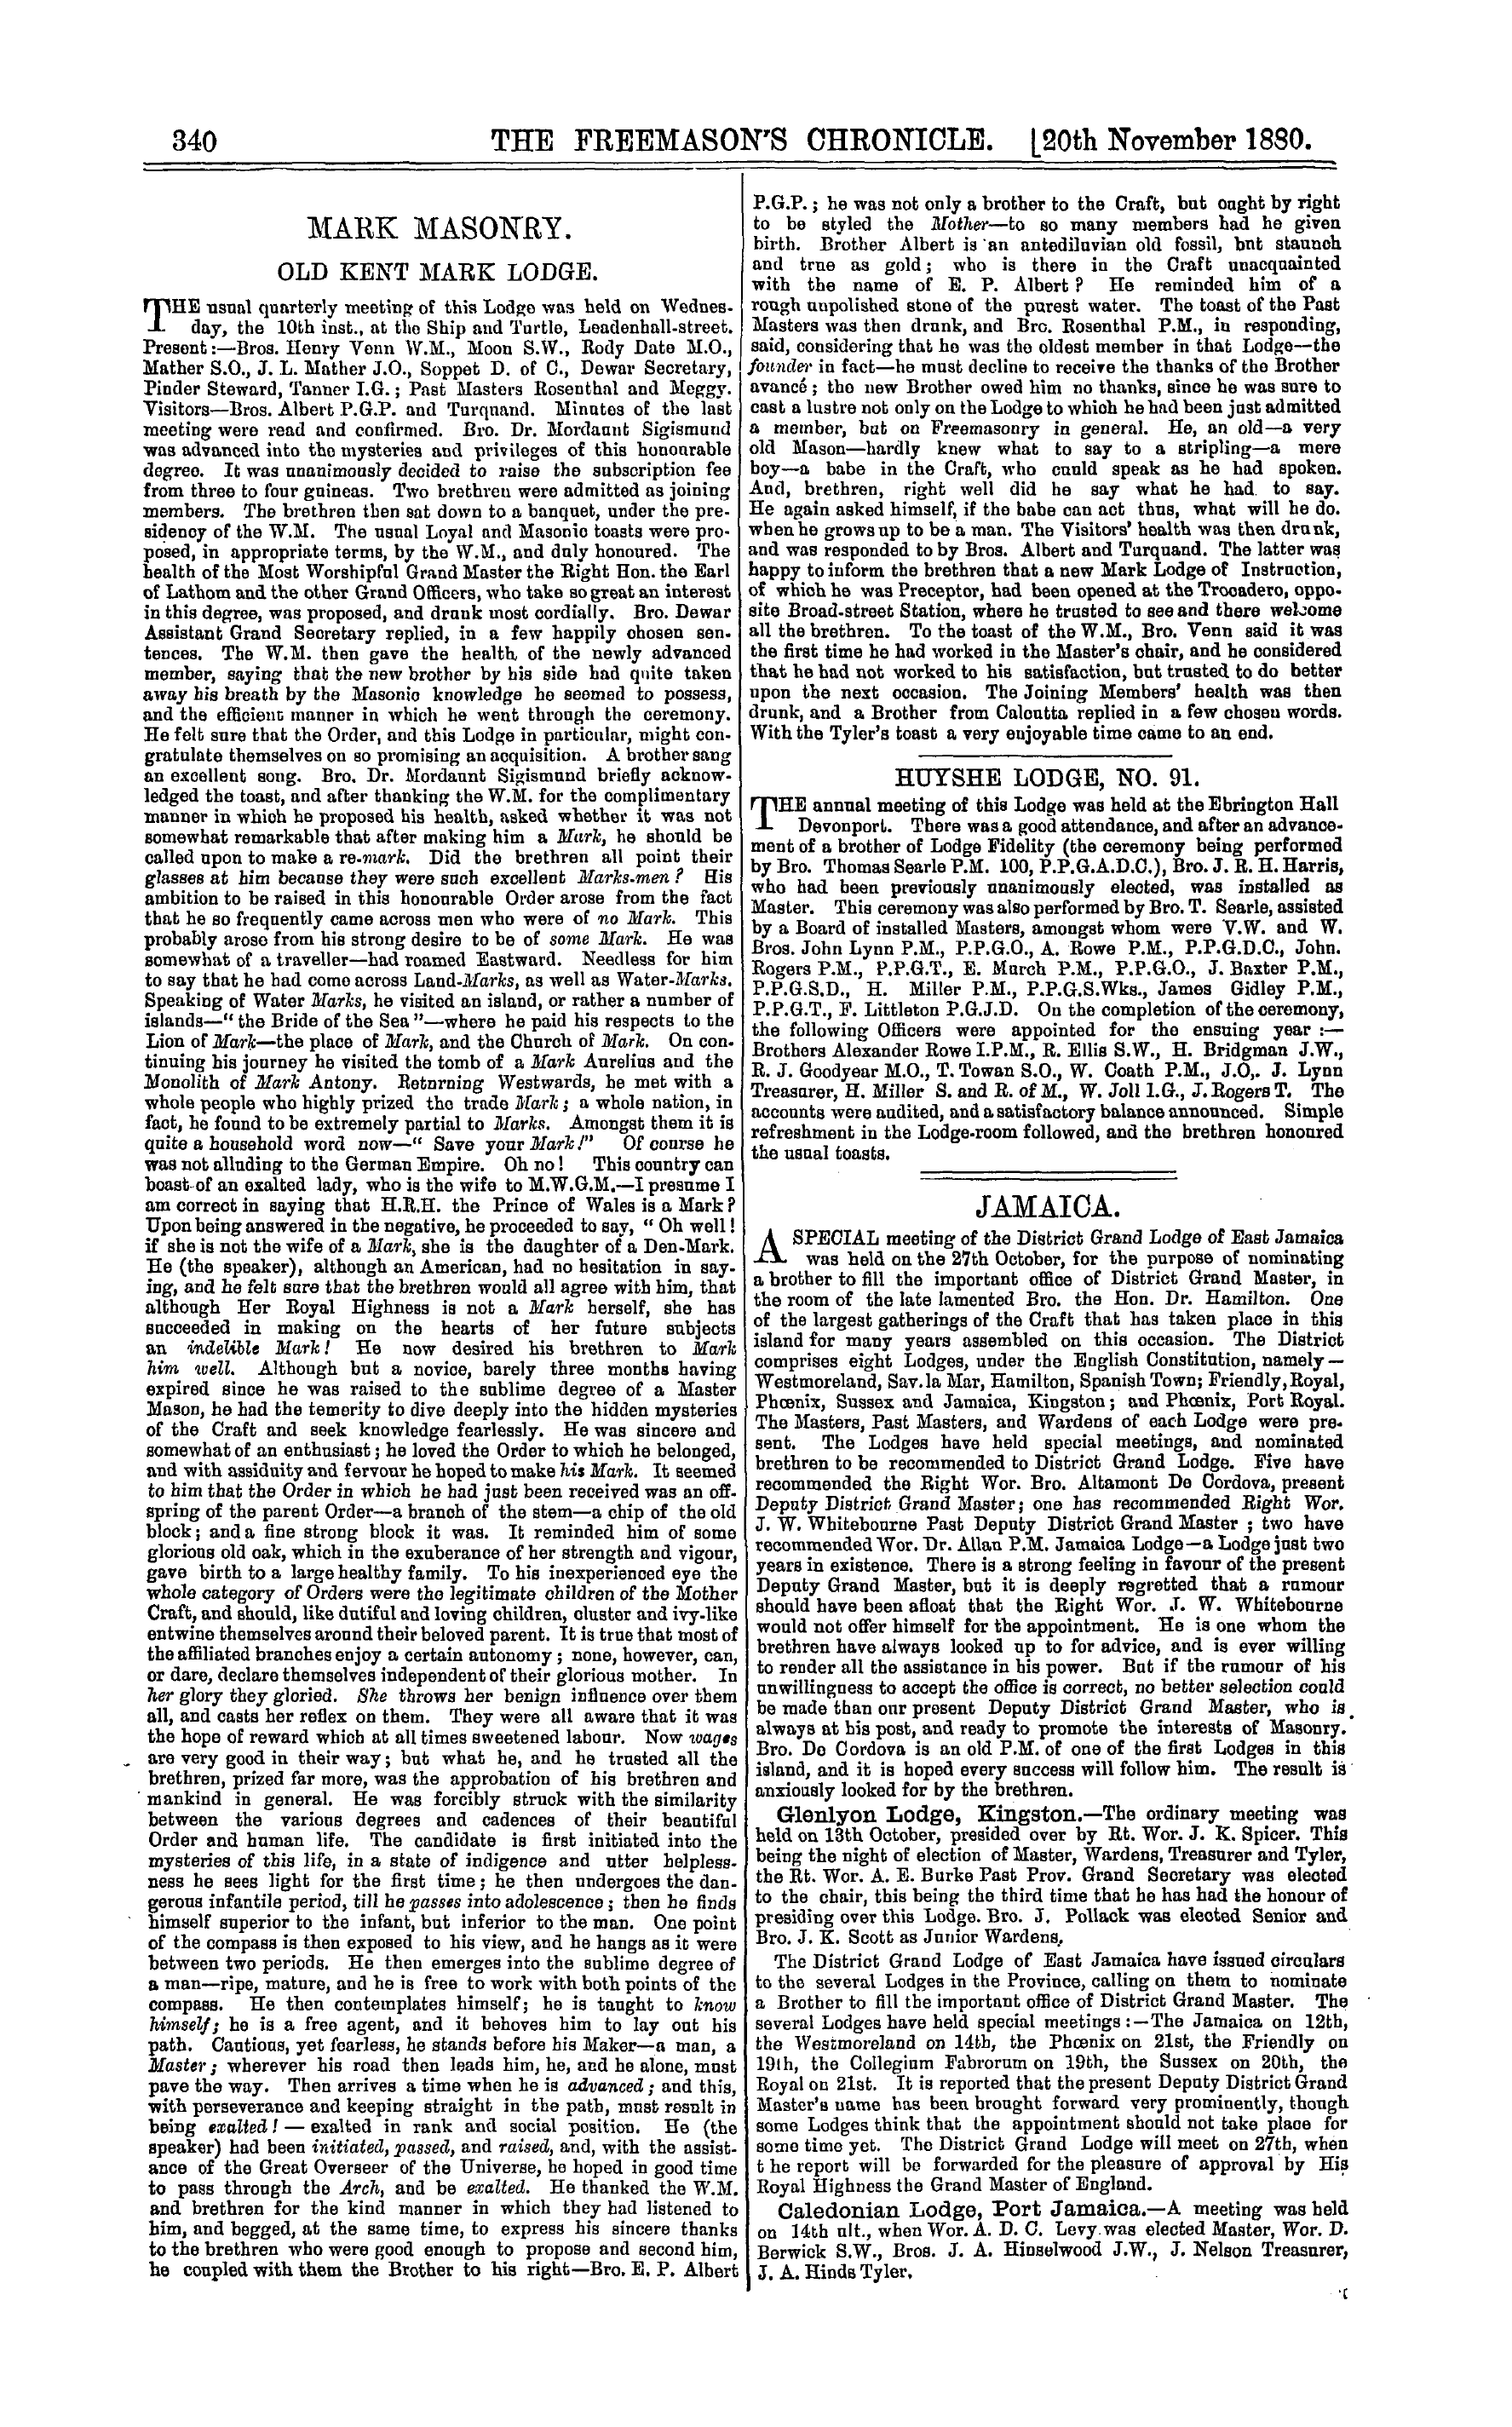 The Freemason's Chronicle: 1880-11-20 - Huyshe Lodge, No. 91.